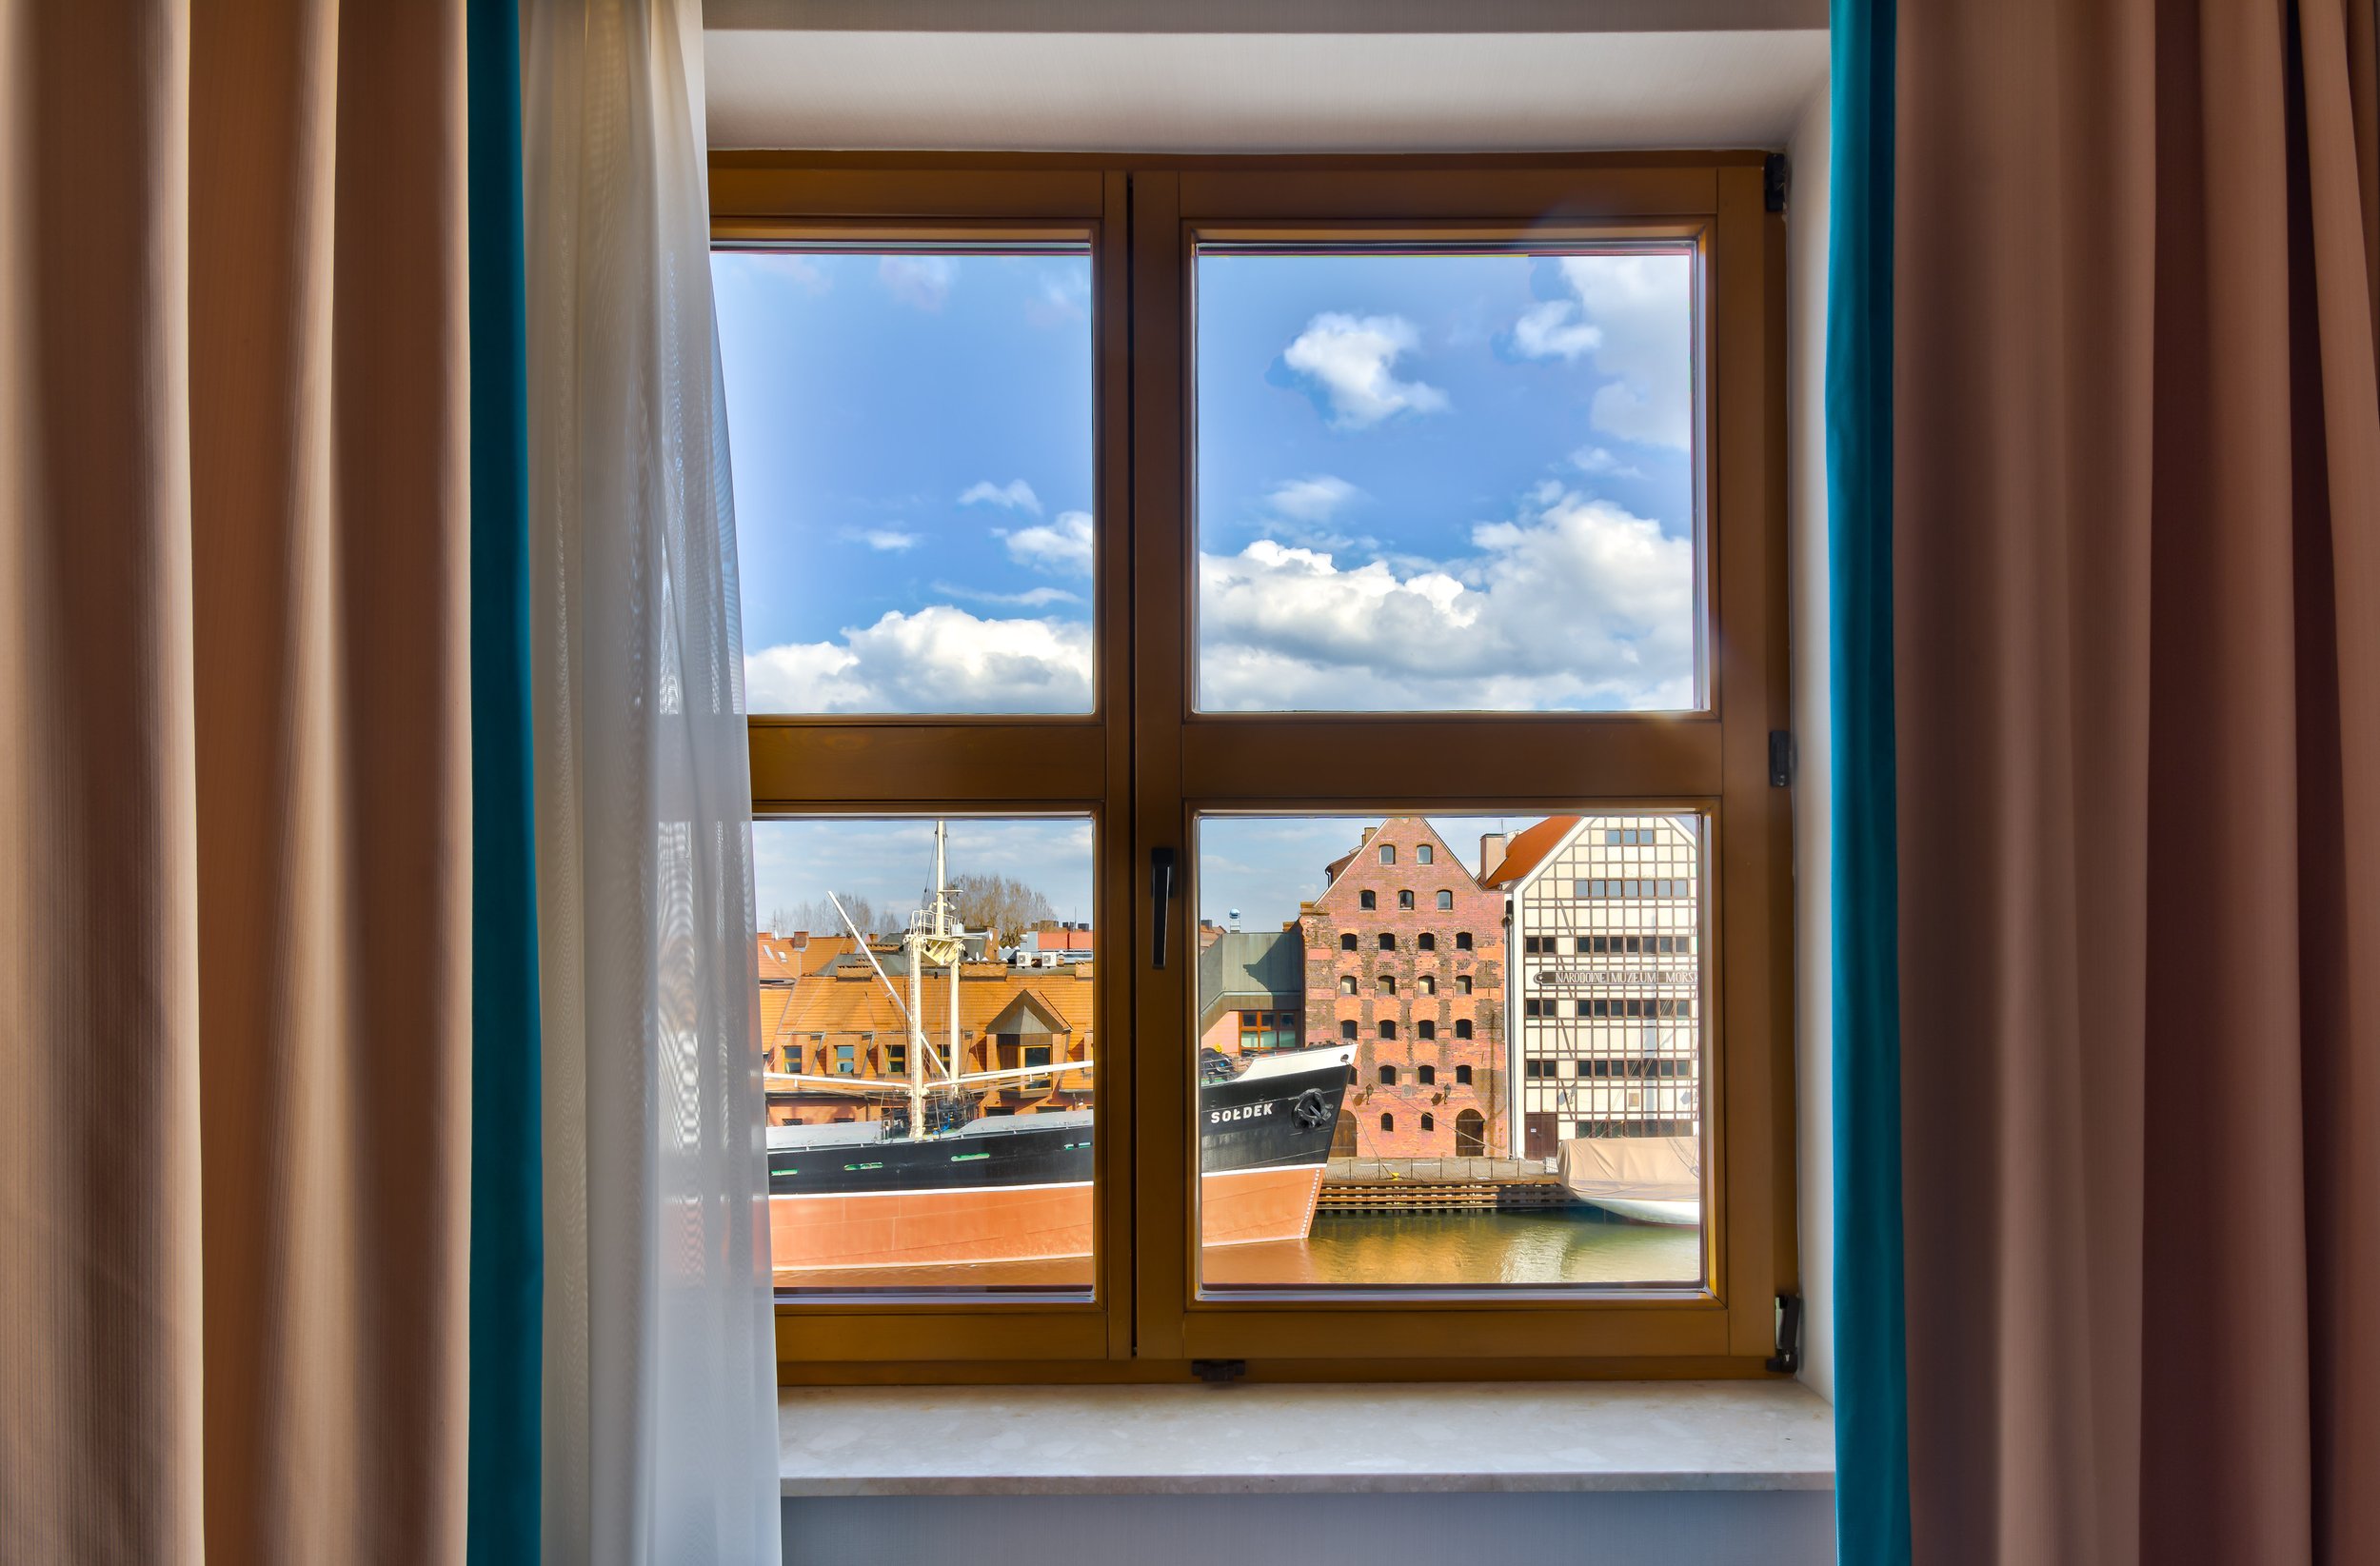 Hotel Hanza in Gdansk, Poland - Window View